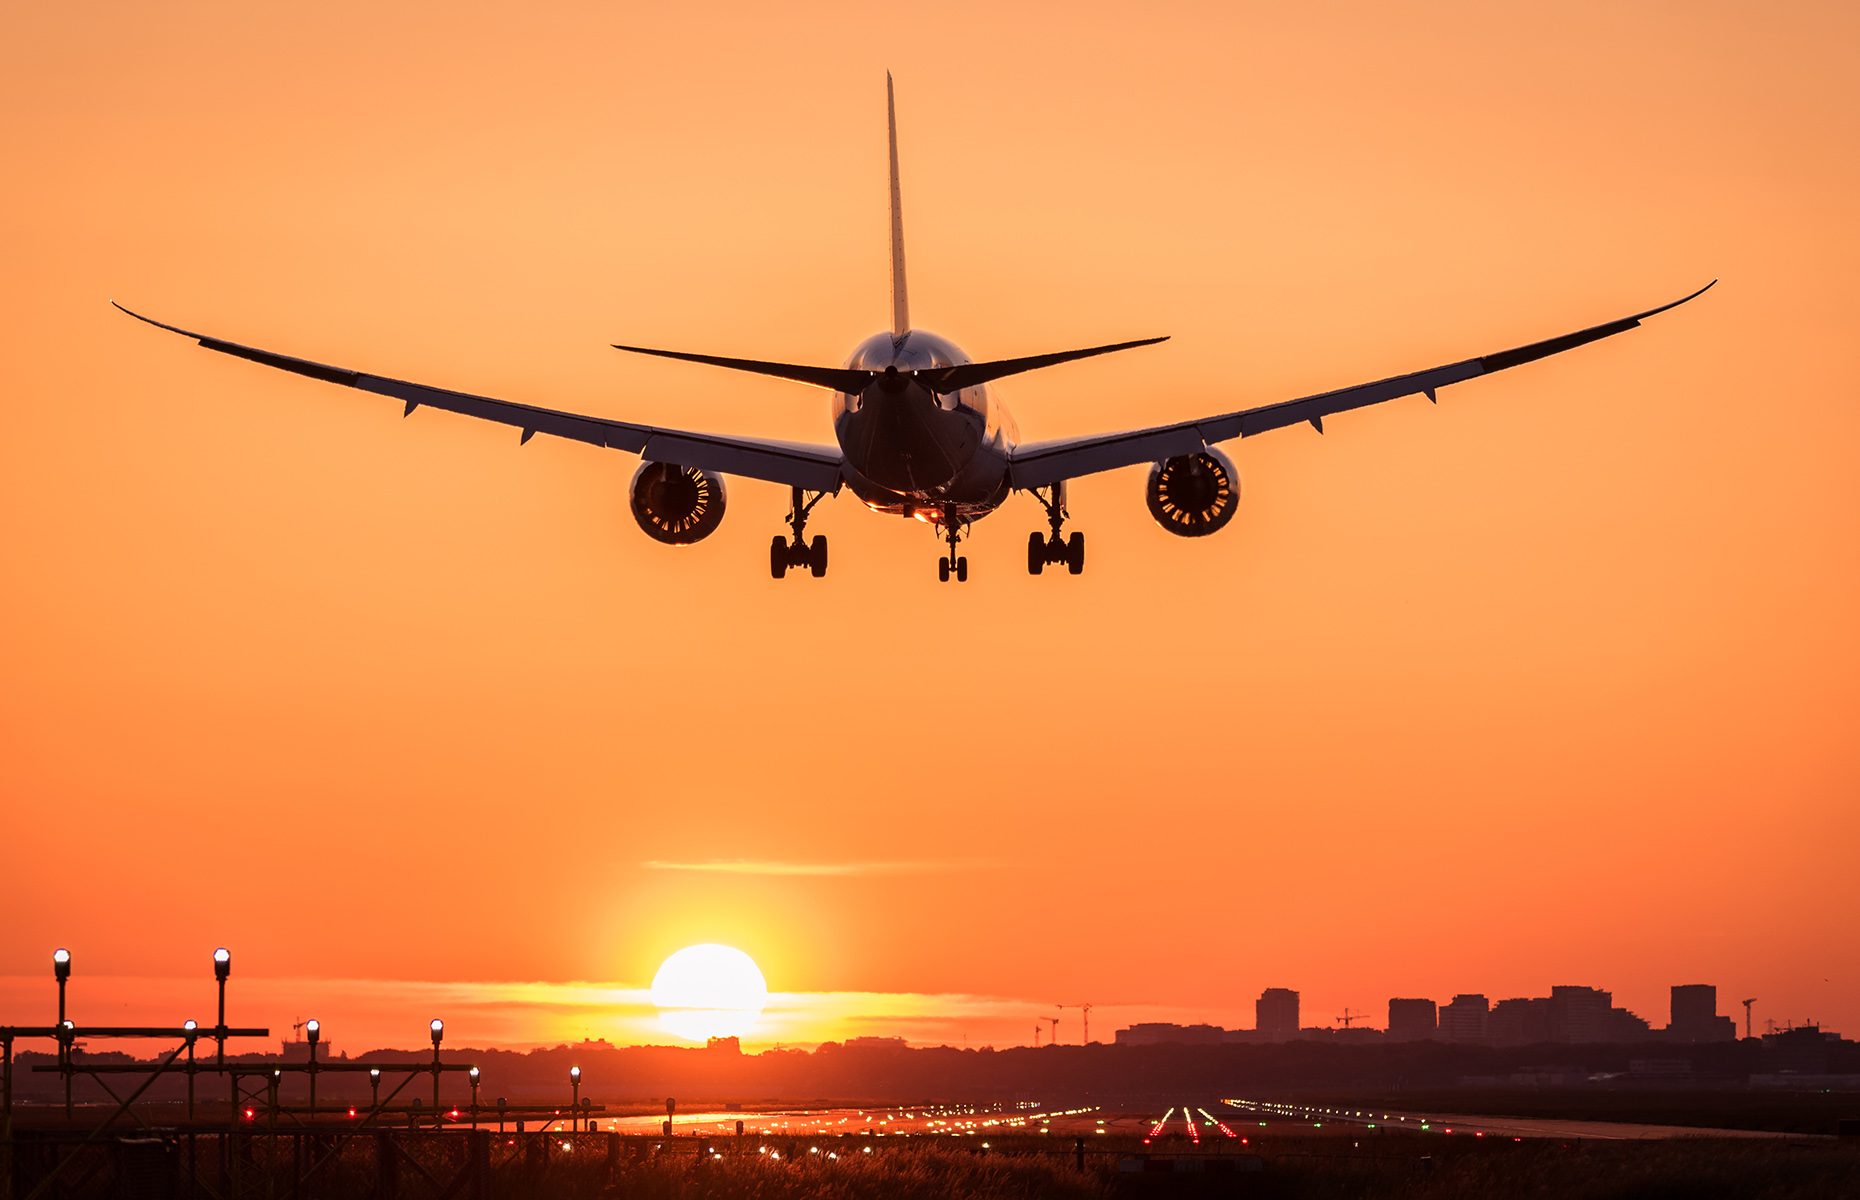 Flight at sunrise (Image: Nieuwland Photography/Shutterstock)